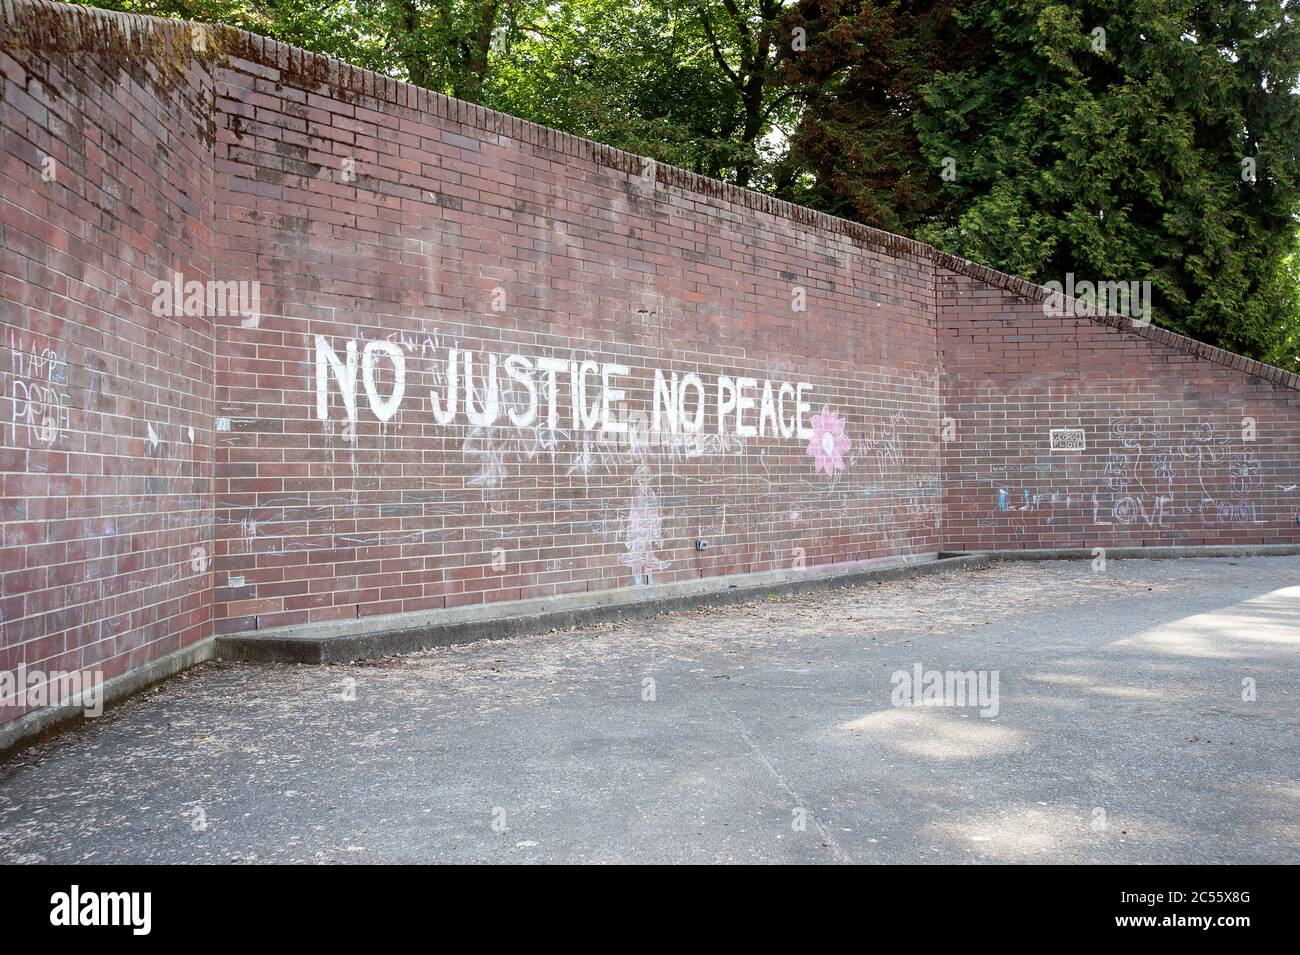 Seattle, Washington State, USA. ‘No Justice No Peace’ writing on wall. Stock Photo